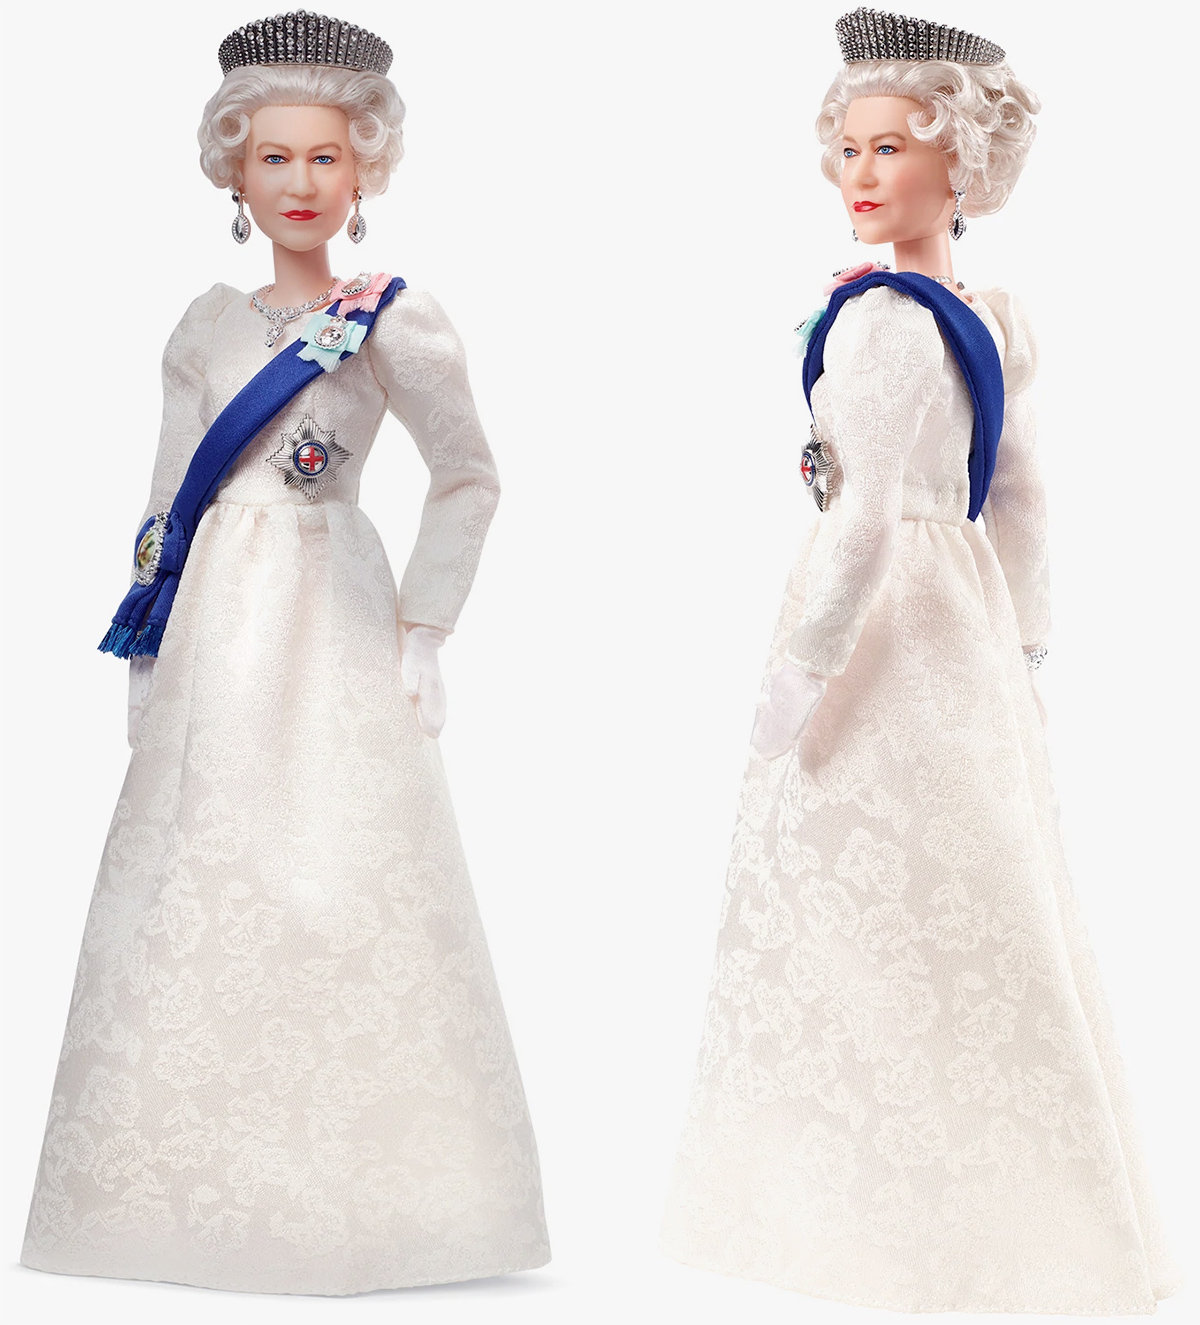 Sua Majestade Rainha Elizabeth II - Boneca Barbie Jubileu de Platina